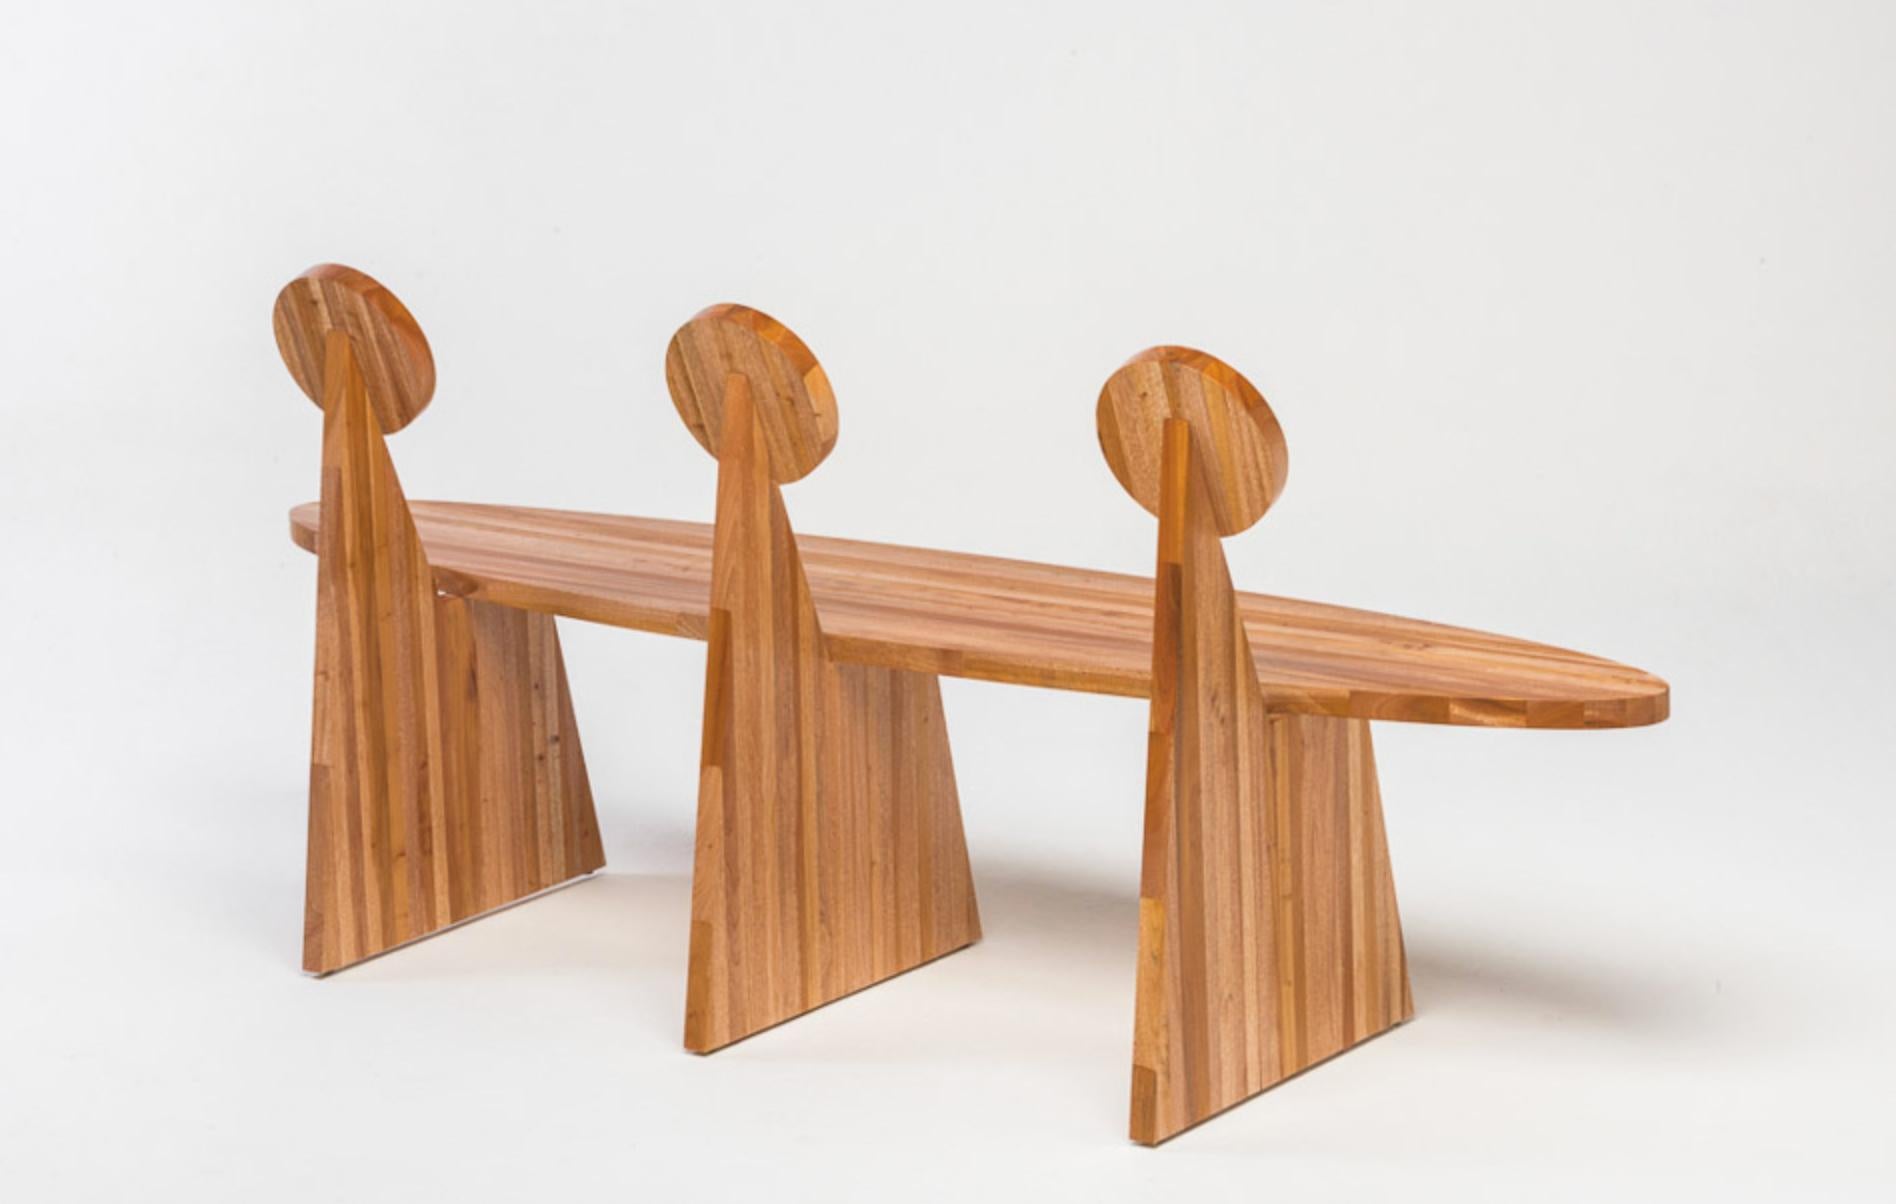 Contemporary Trio Bench in Solid African Mahogany Wood Panels Brazilian Design (Brasilianisch)